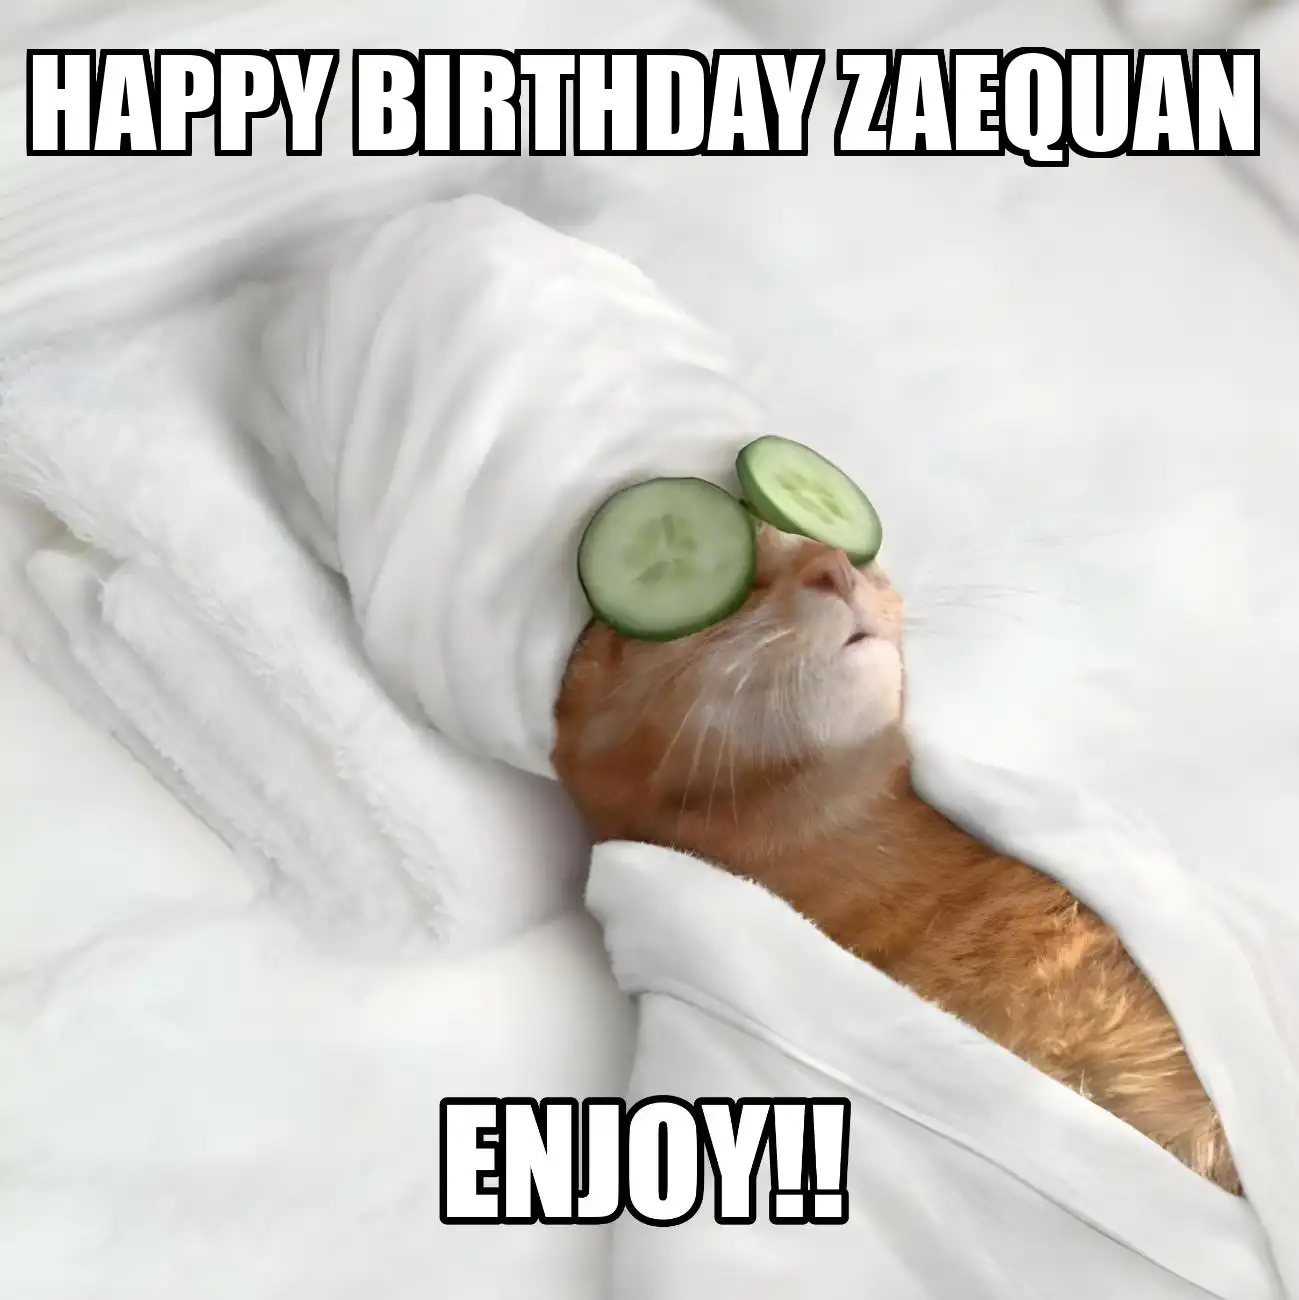 Happy Birthday Zaequan Enjoy Cat Meme